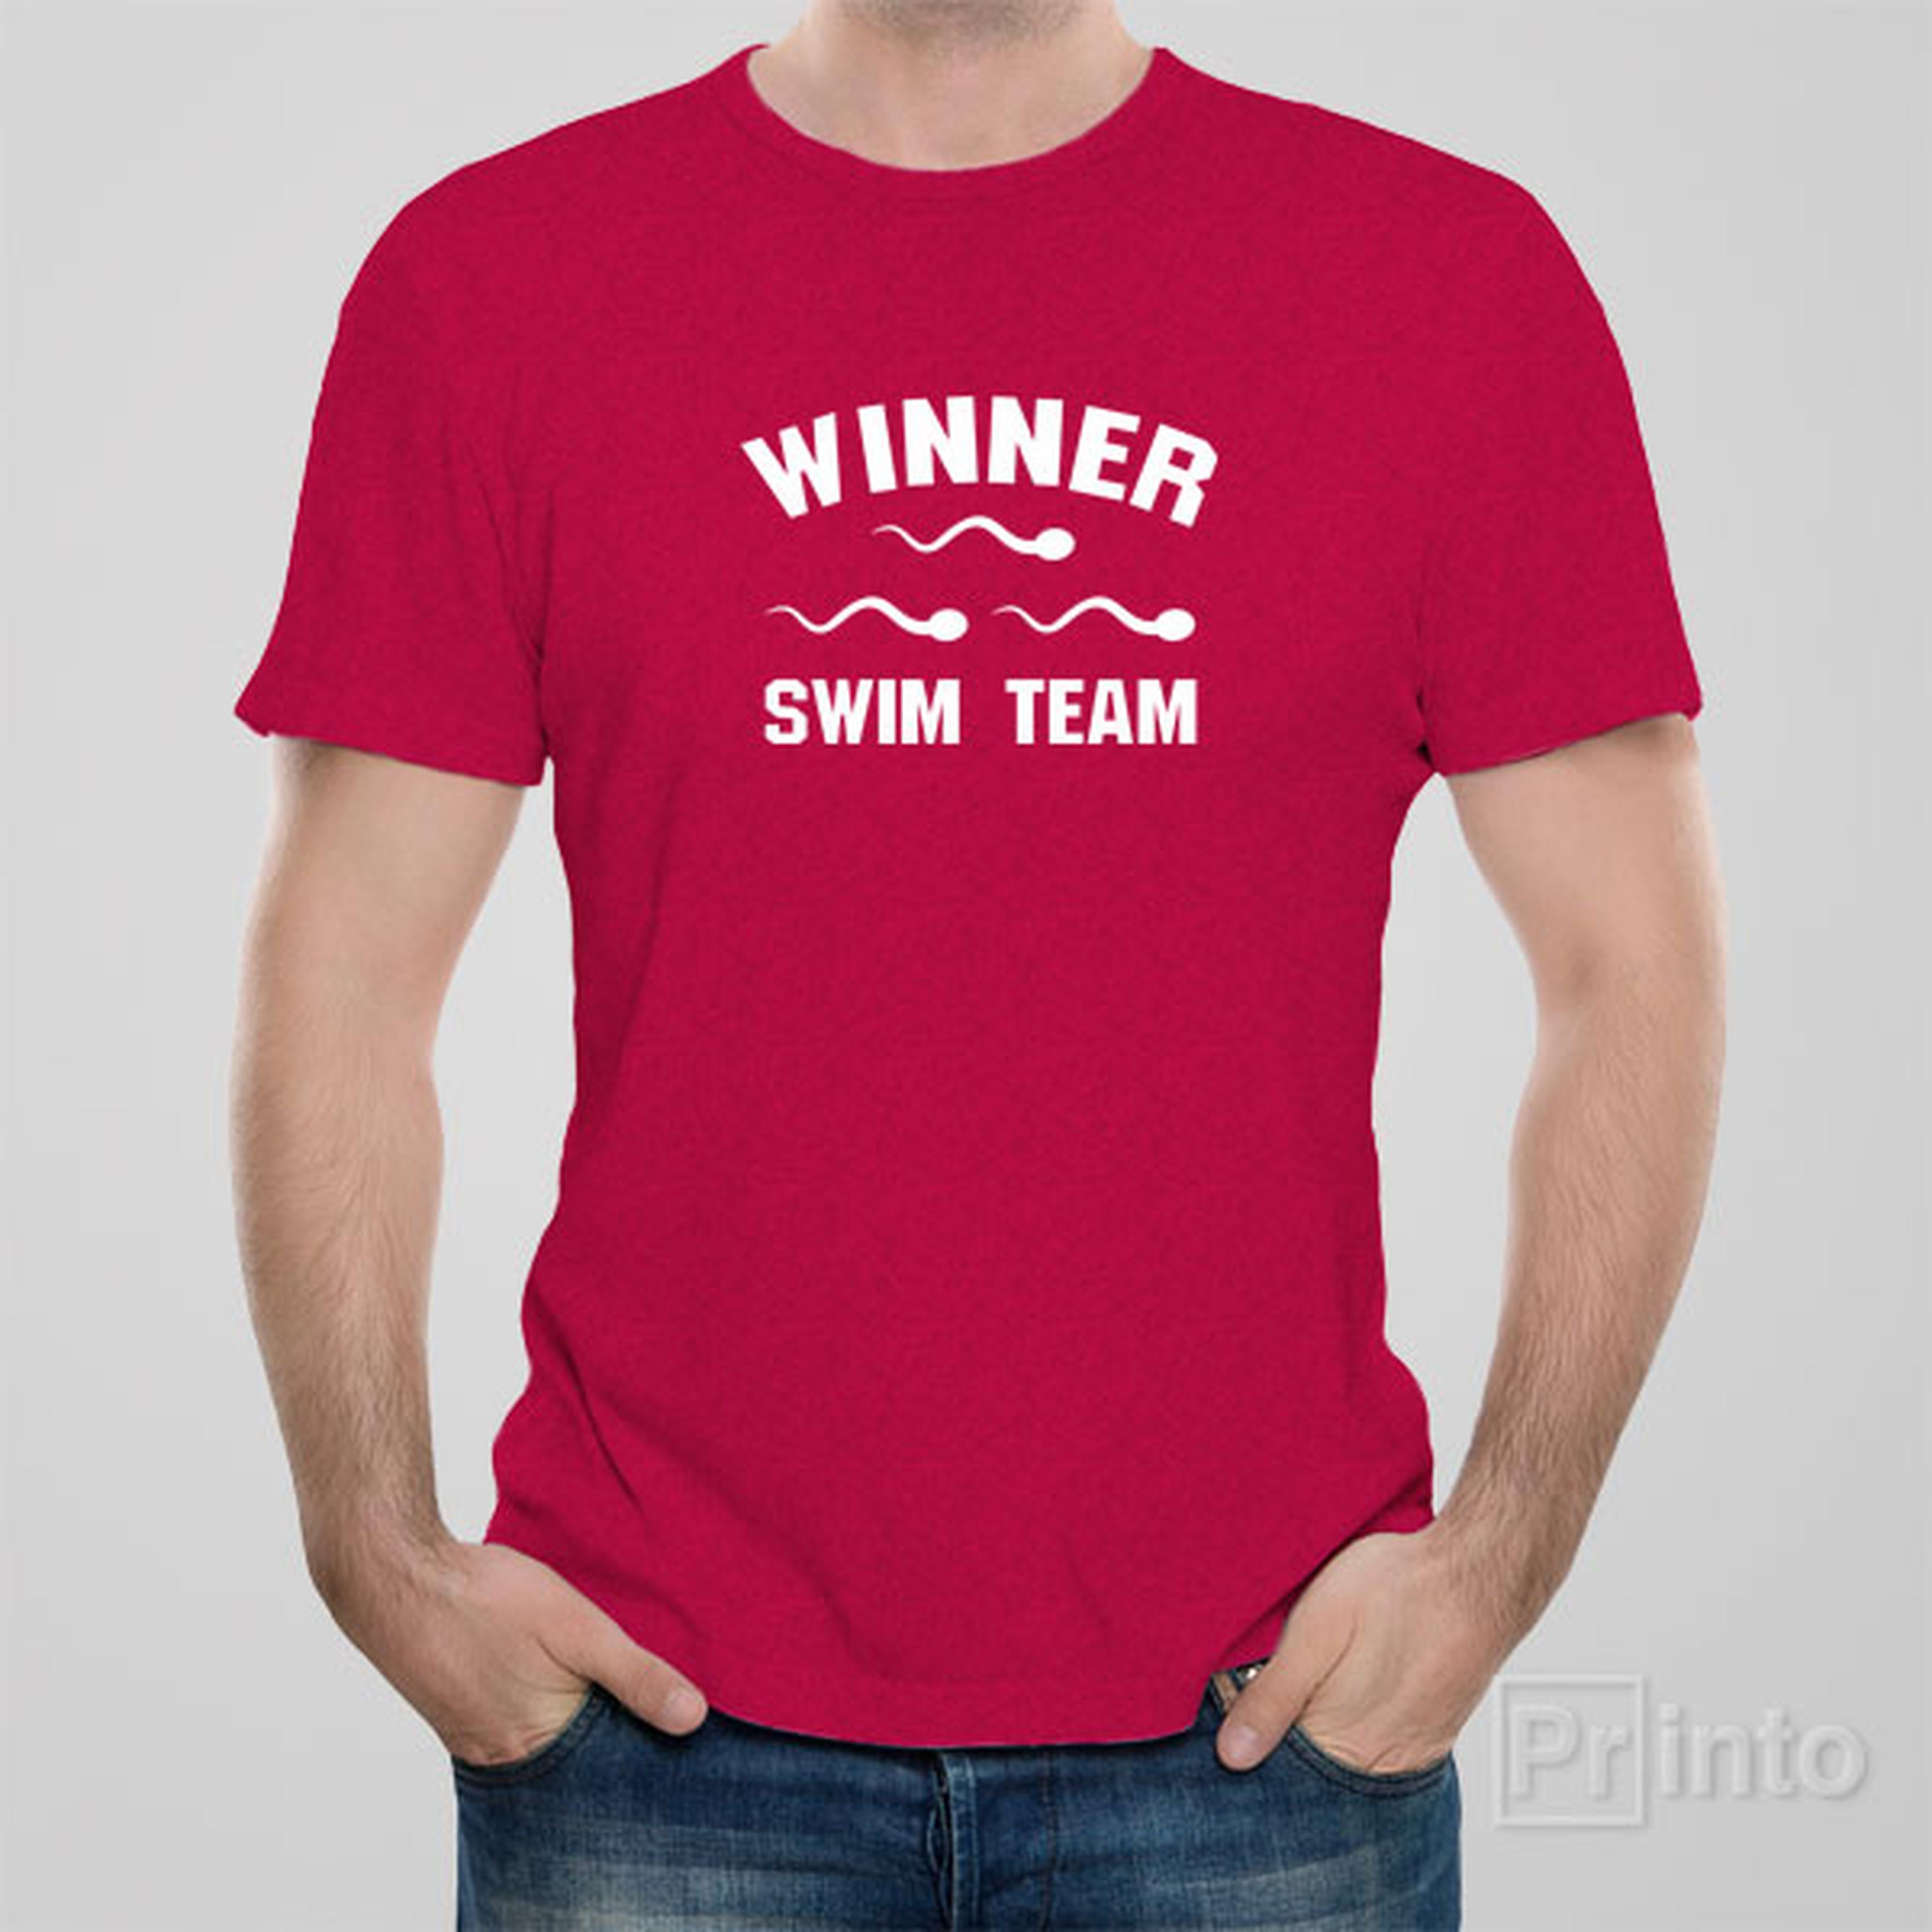 winner-swim-team-t-shirt